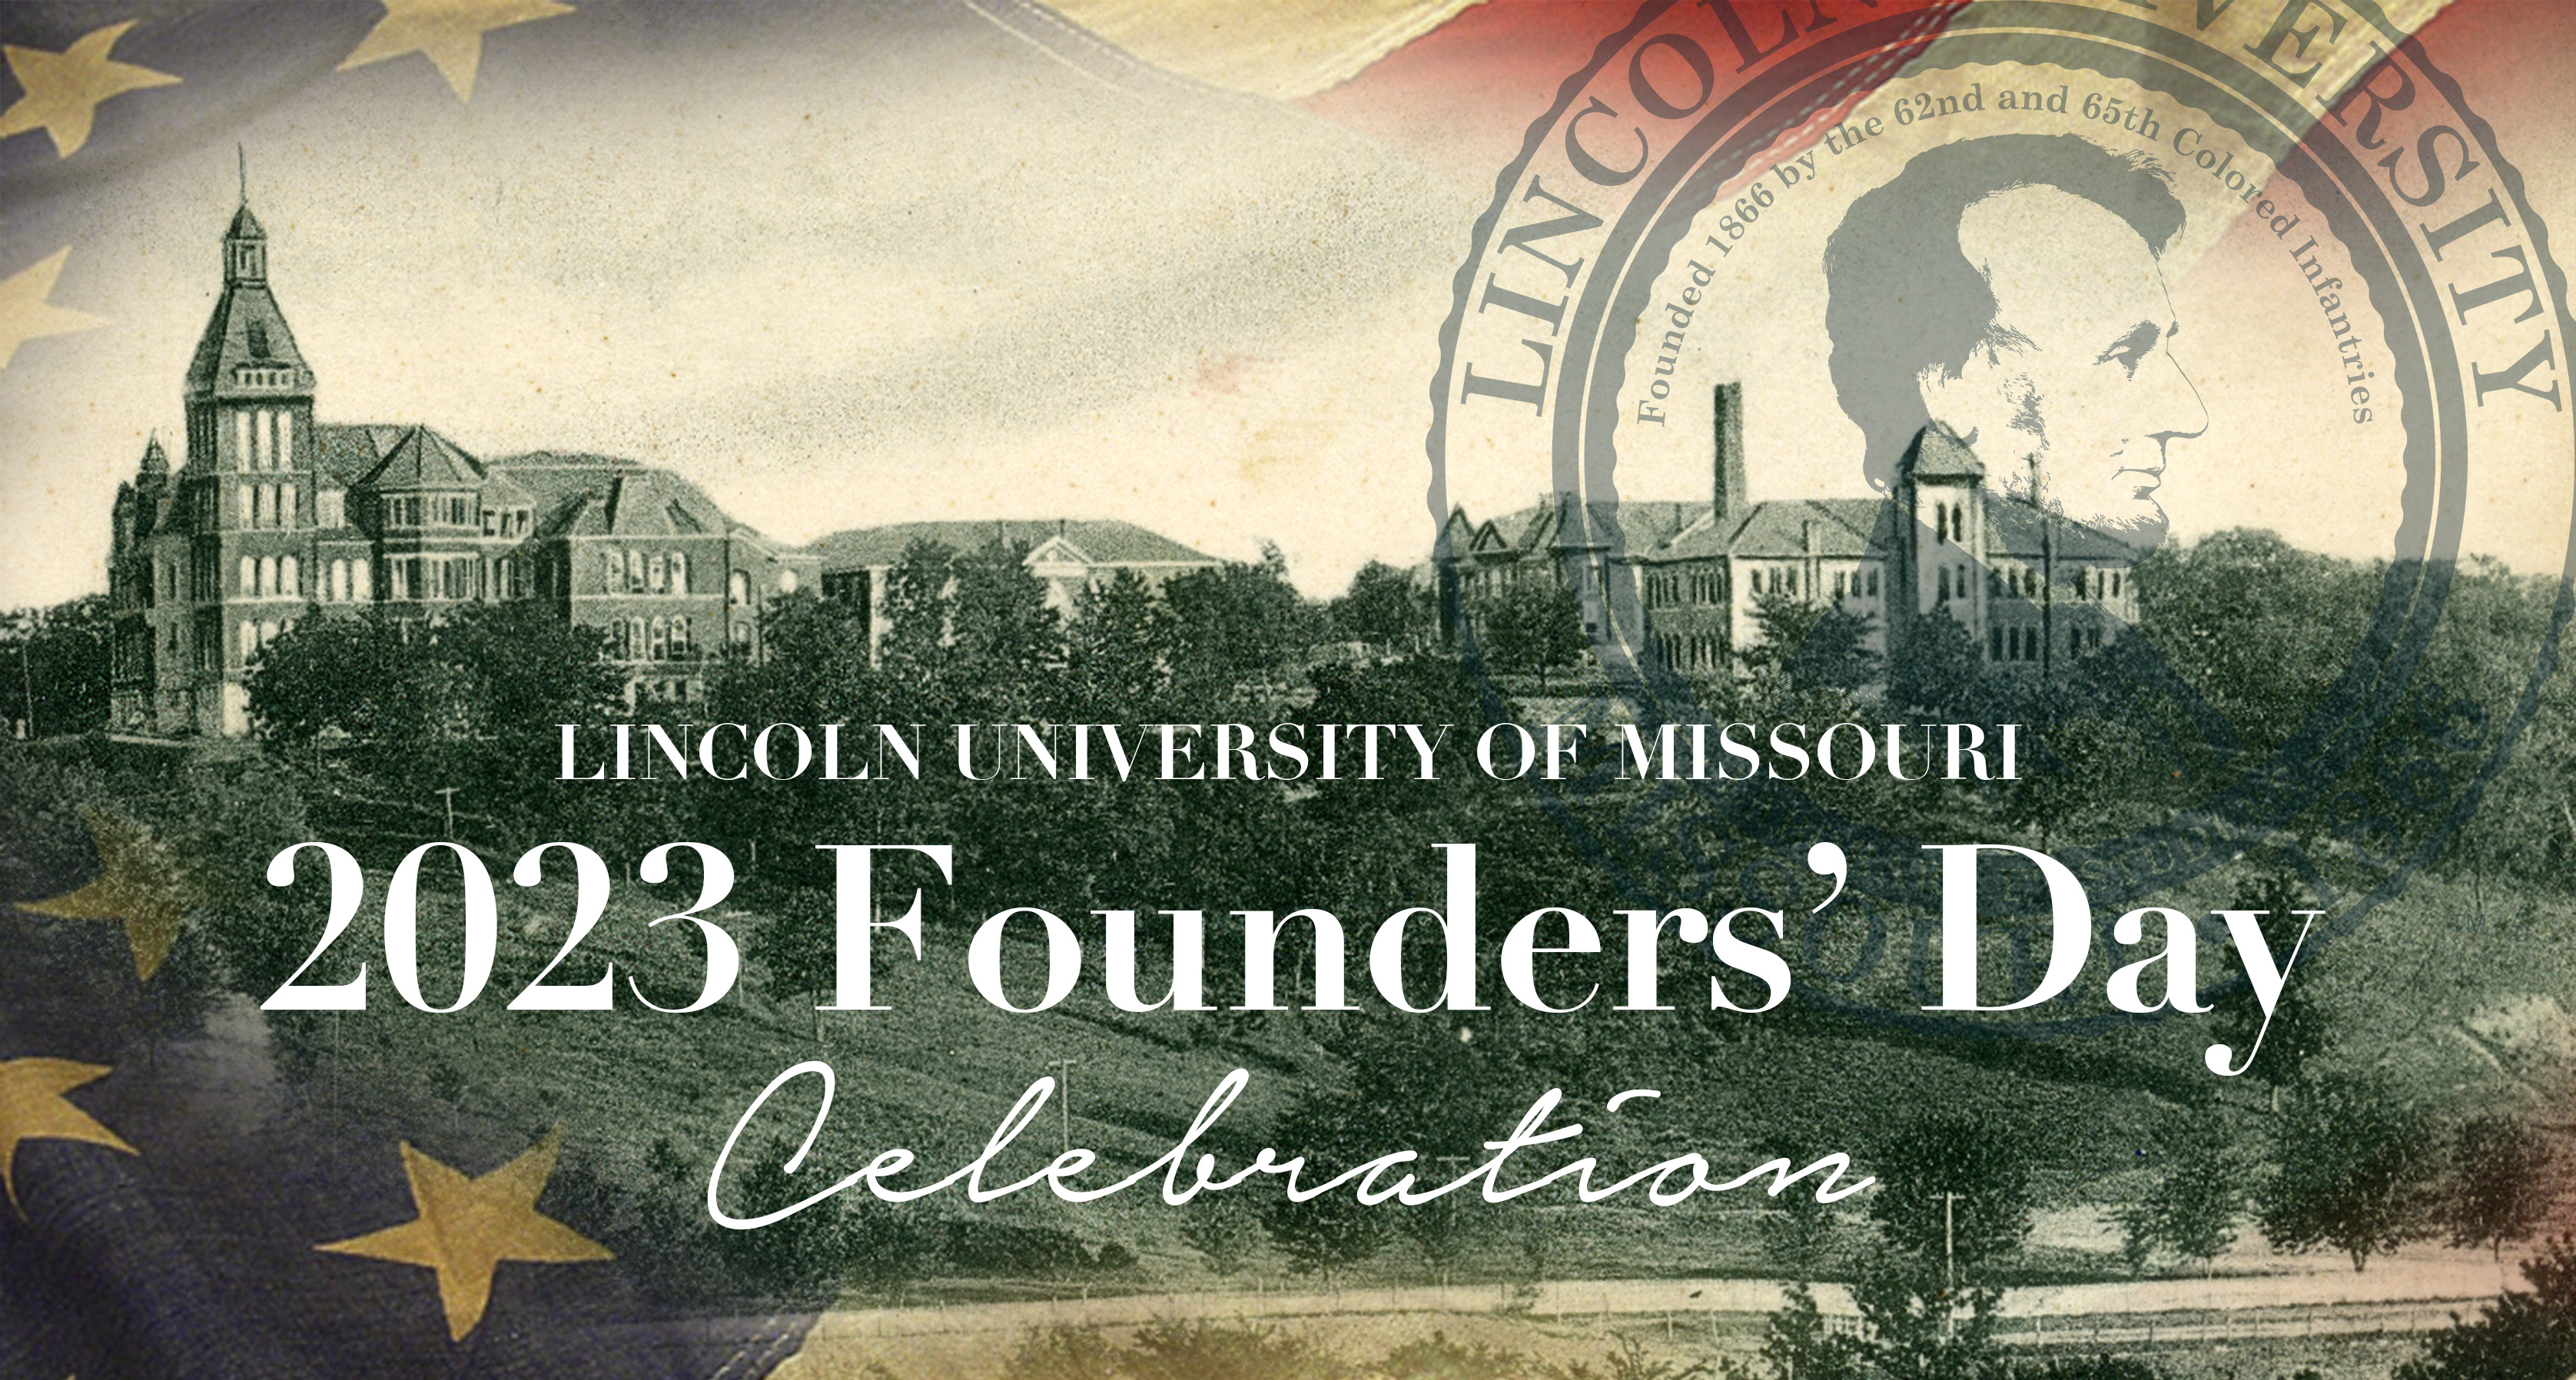 Lincoln University’s 2023 Founders’ Day Celebration